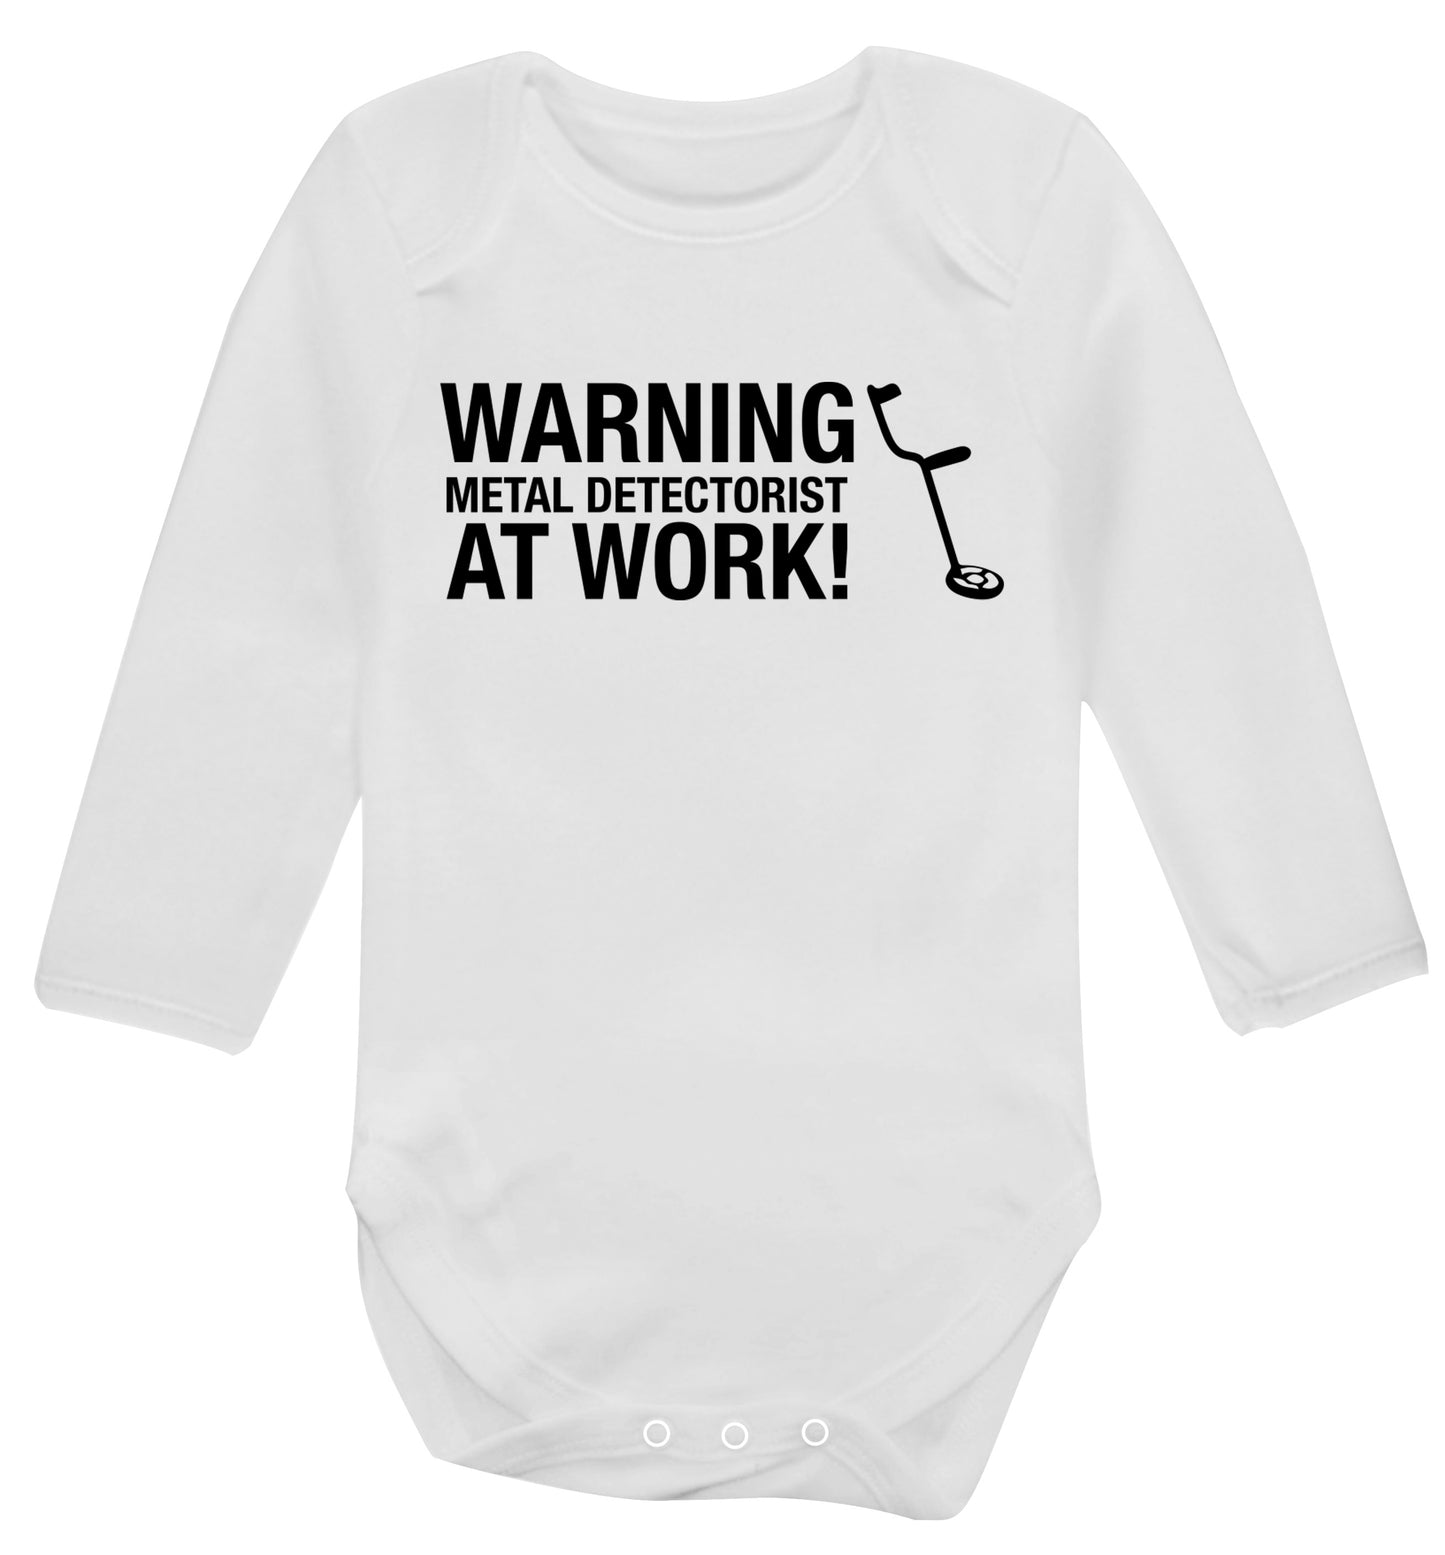 Warning metal detectorist at work! Baby Vest long sleeved white 6-12 months